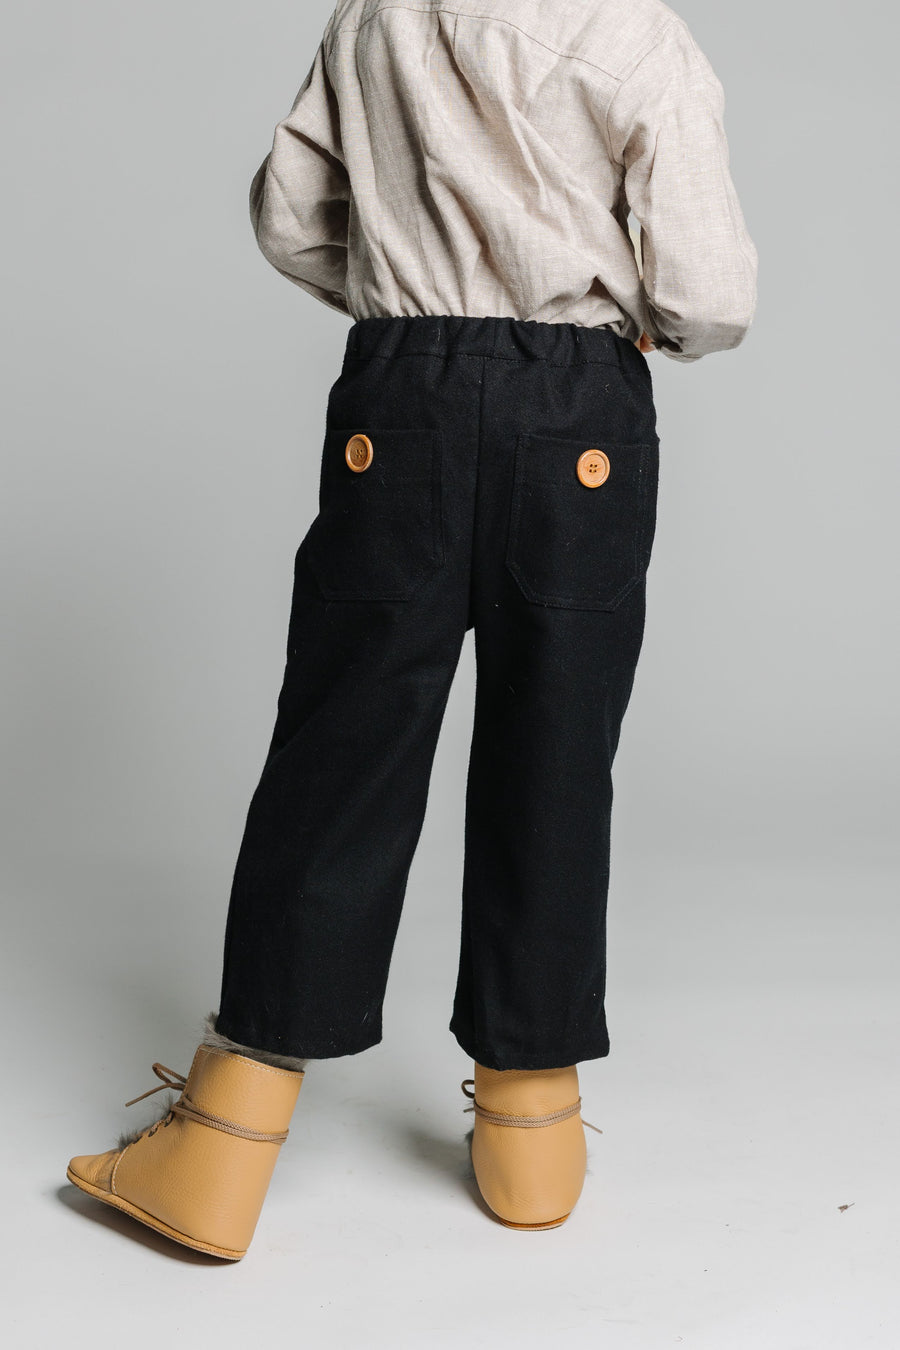 Jasper Pants with Alder Shirt and Fur Boots